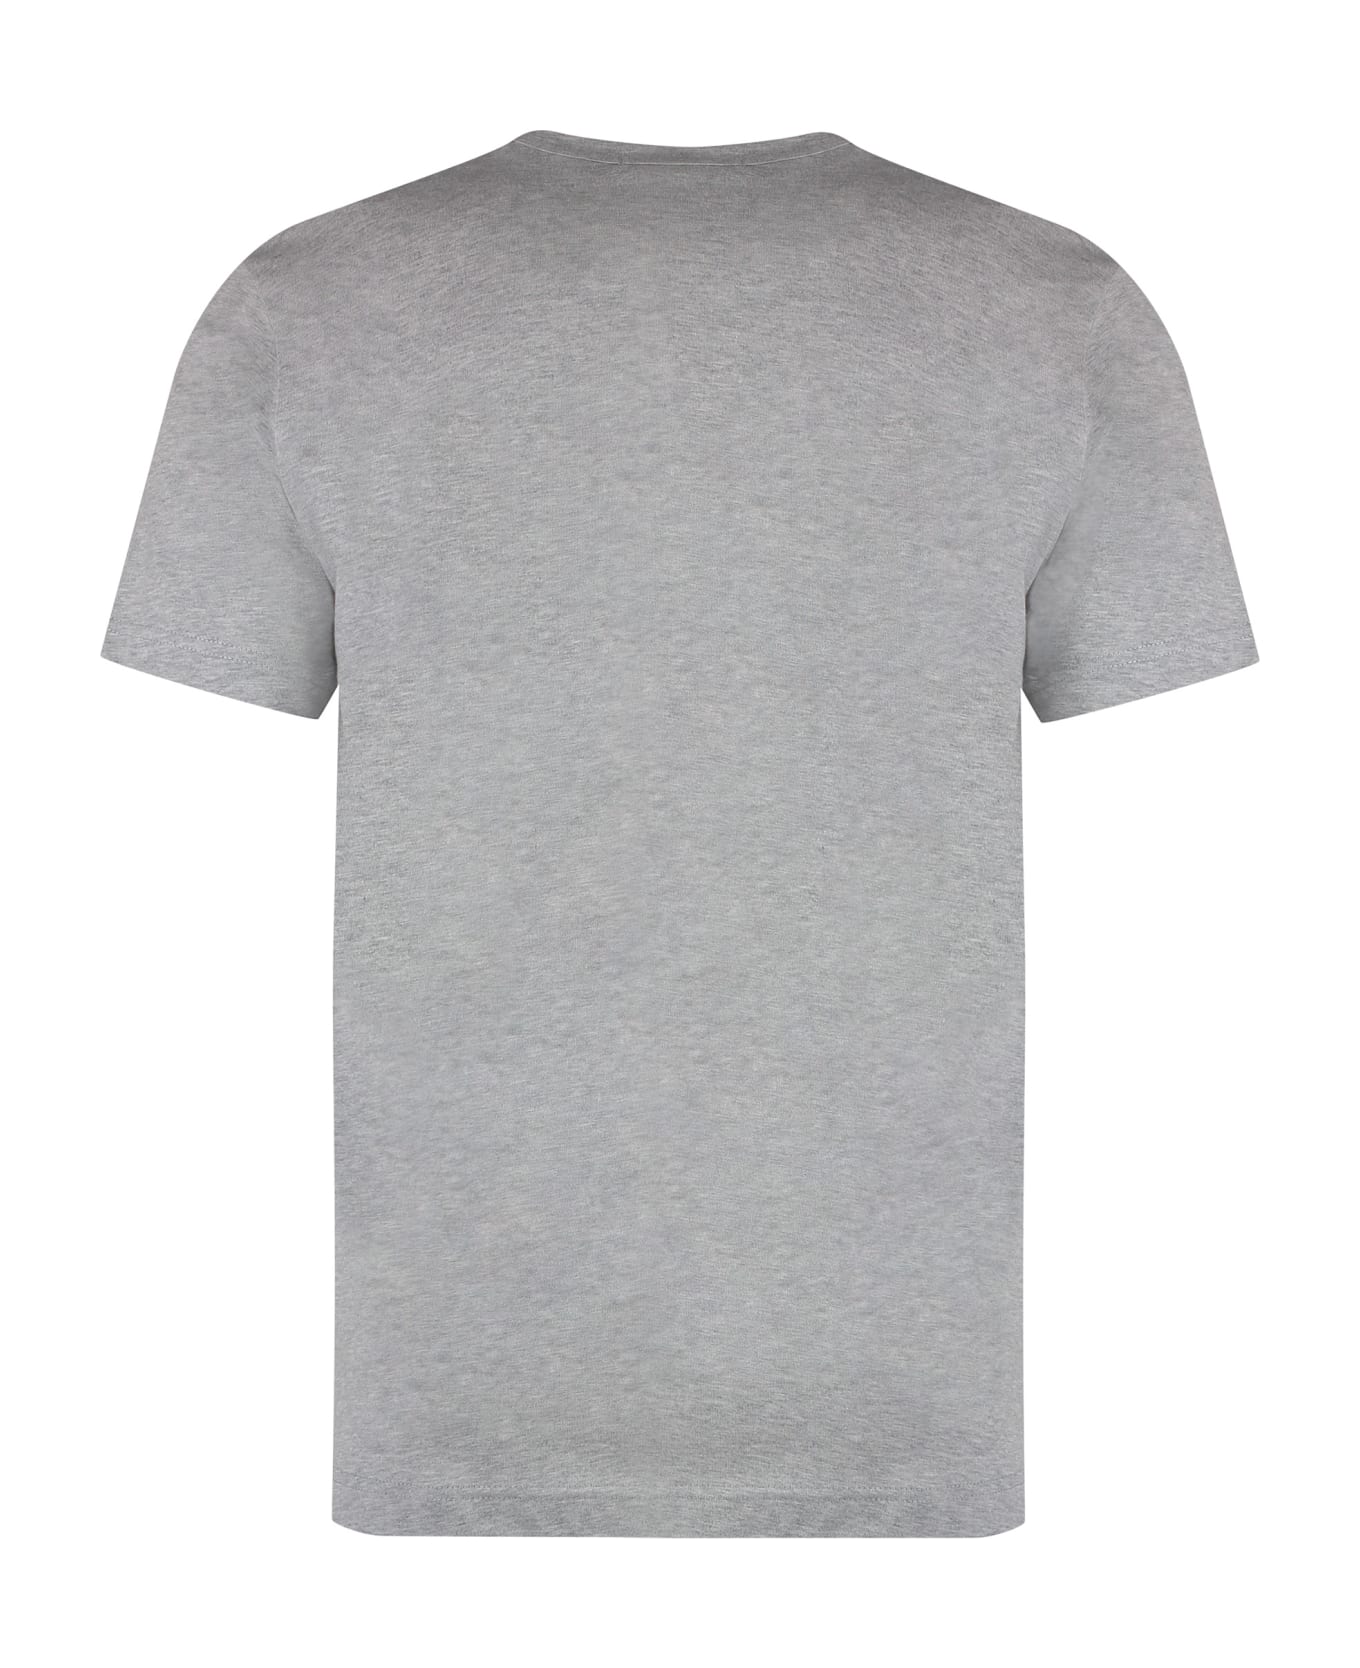 Comme des Garçons Shirt Andy Warhol Print Cotton T-shirt - grey